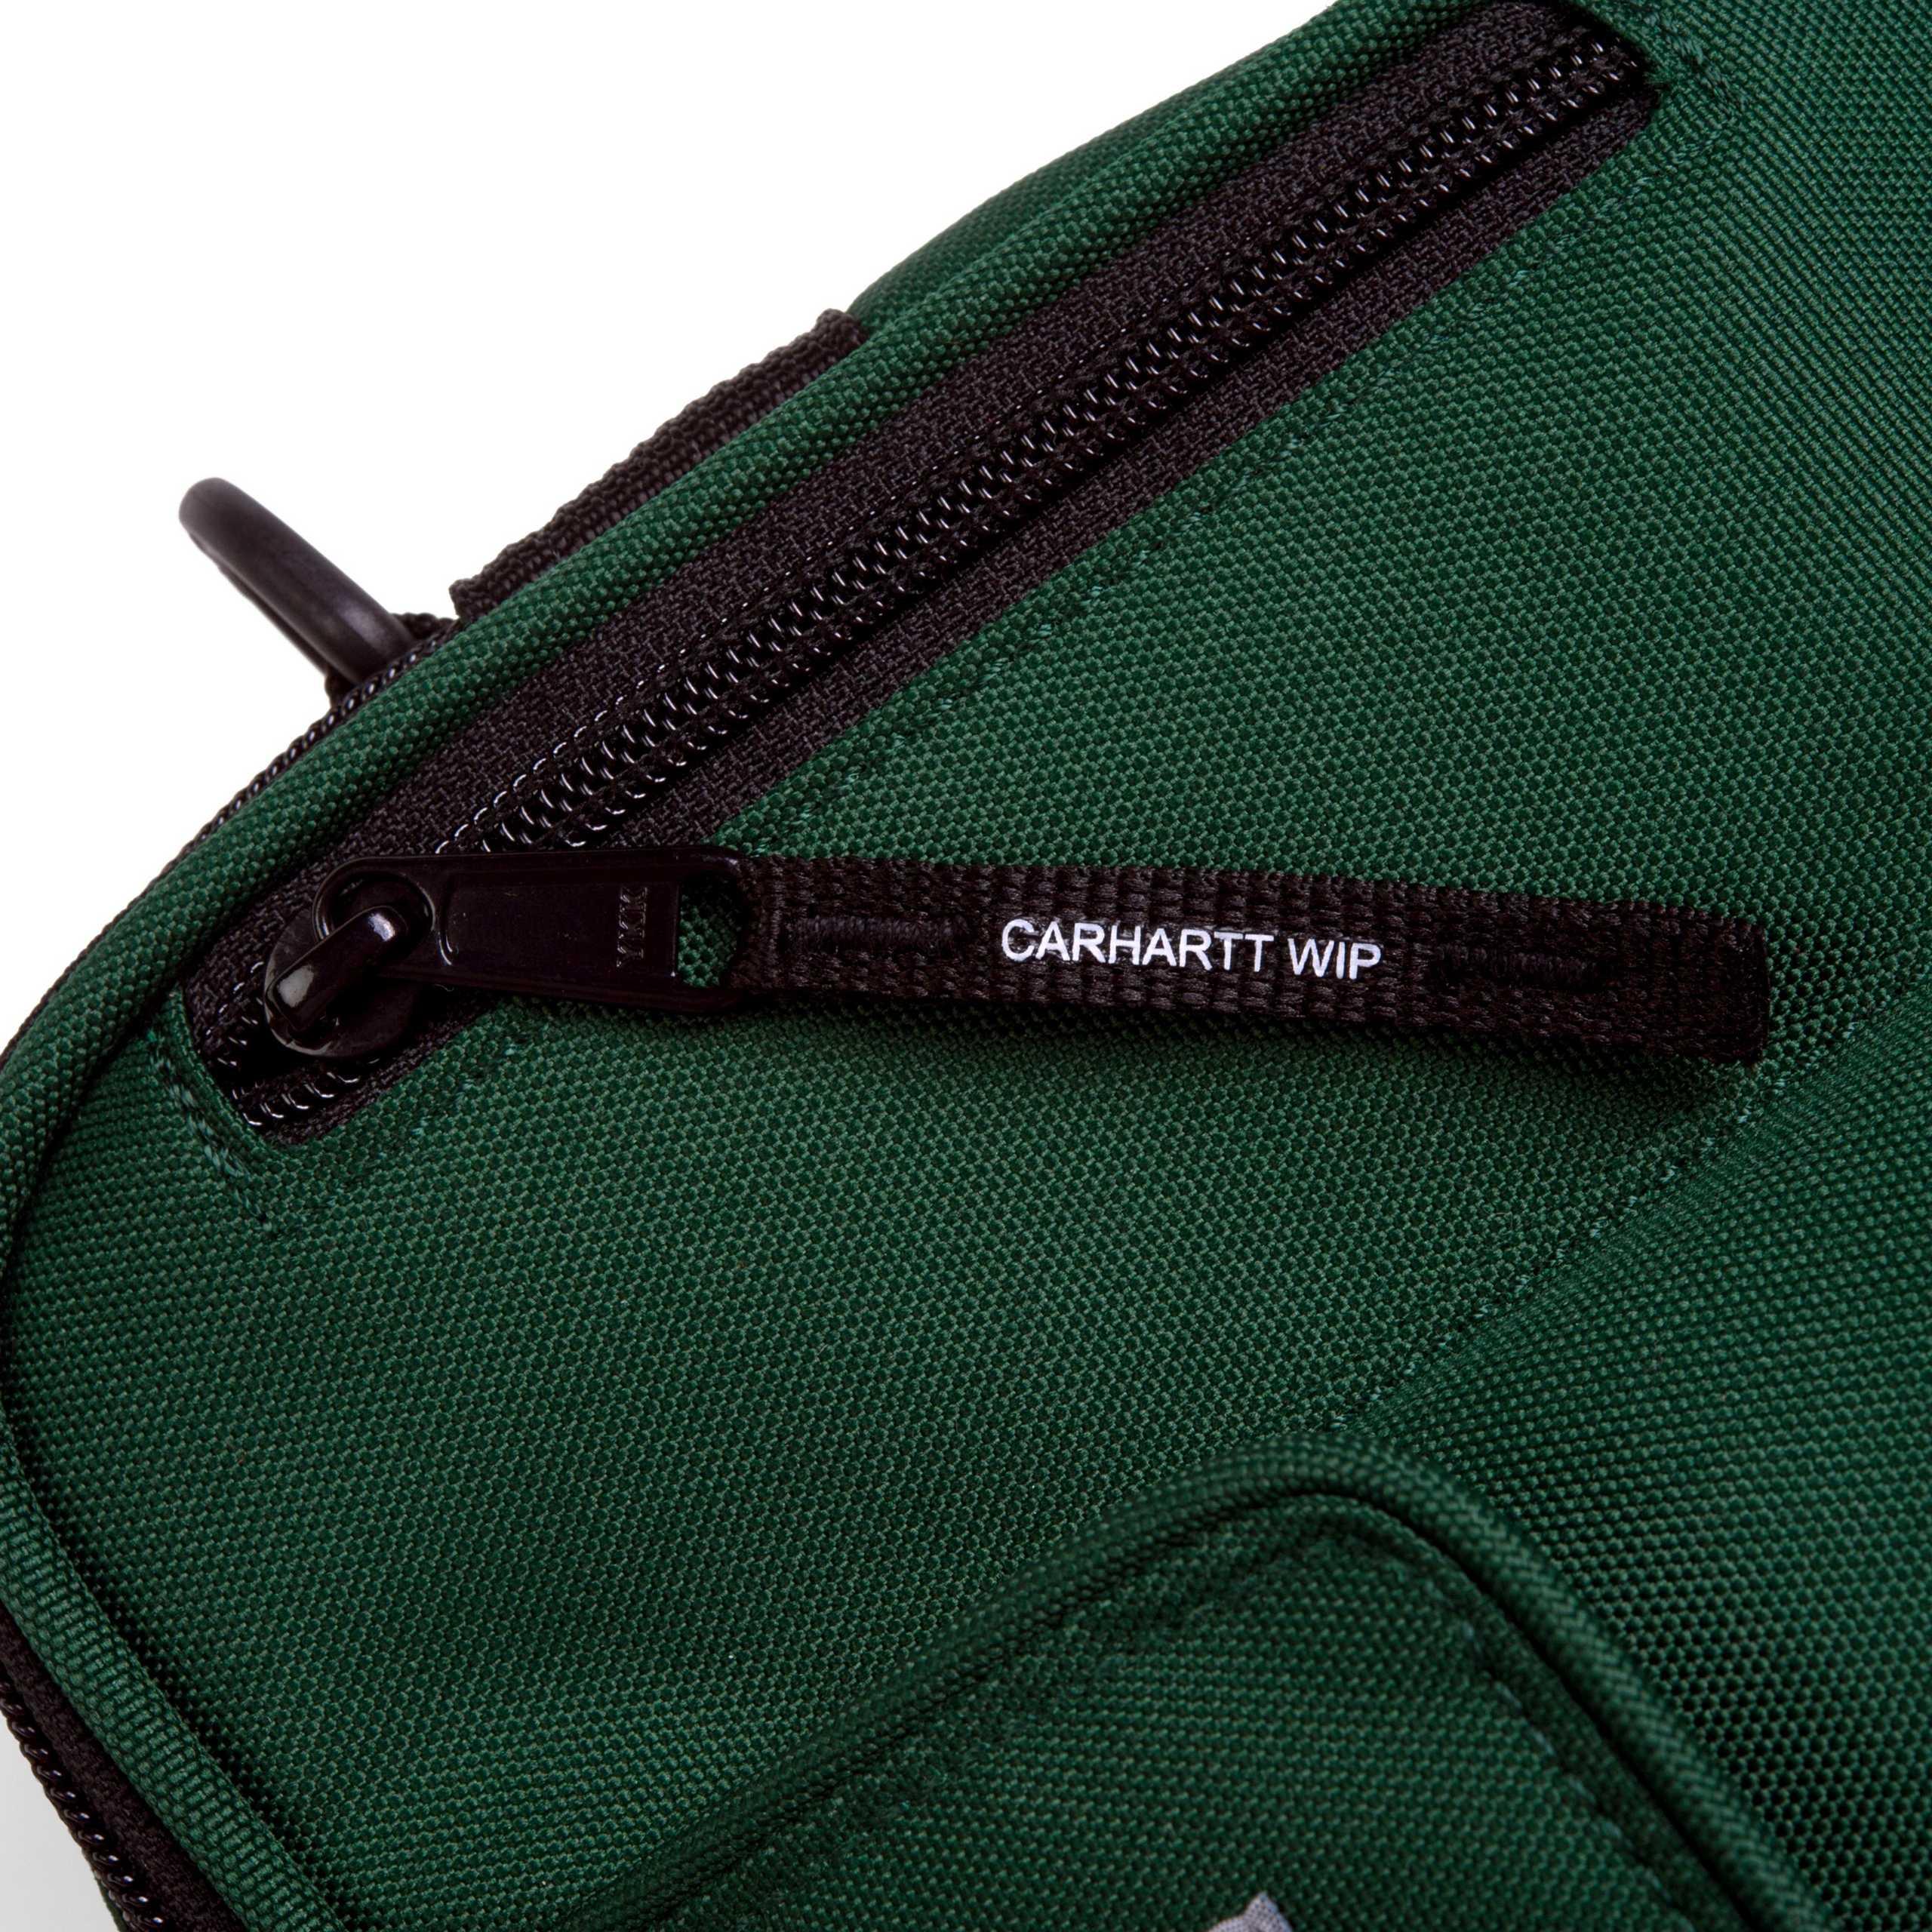 Carhartt WIP Haste Strap Bag | Plant